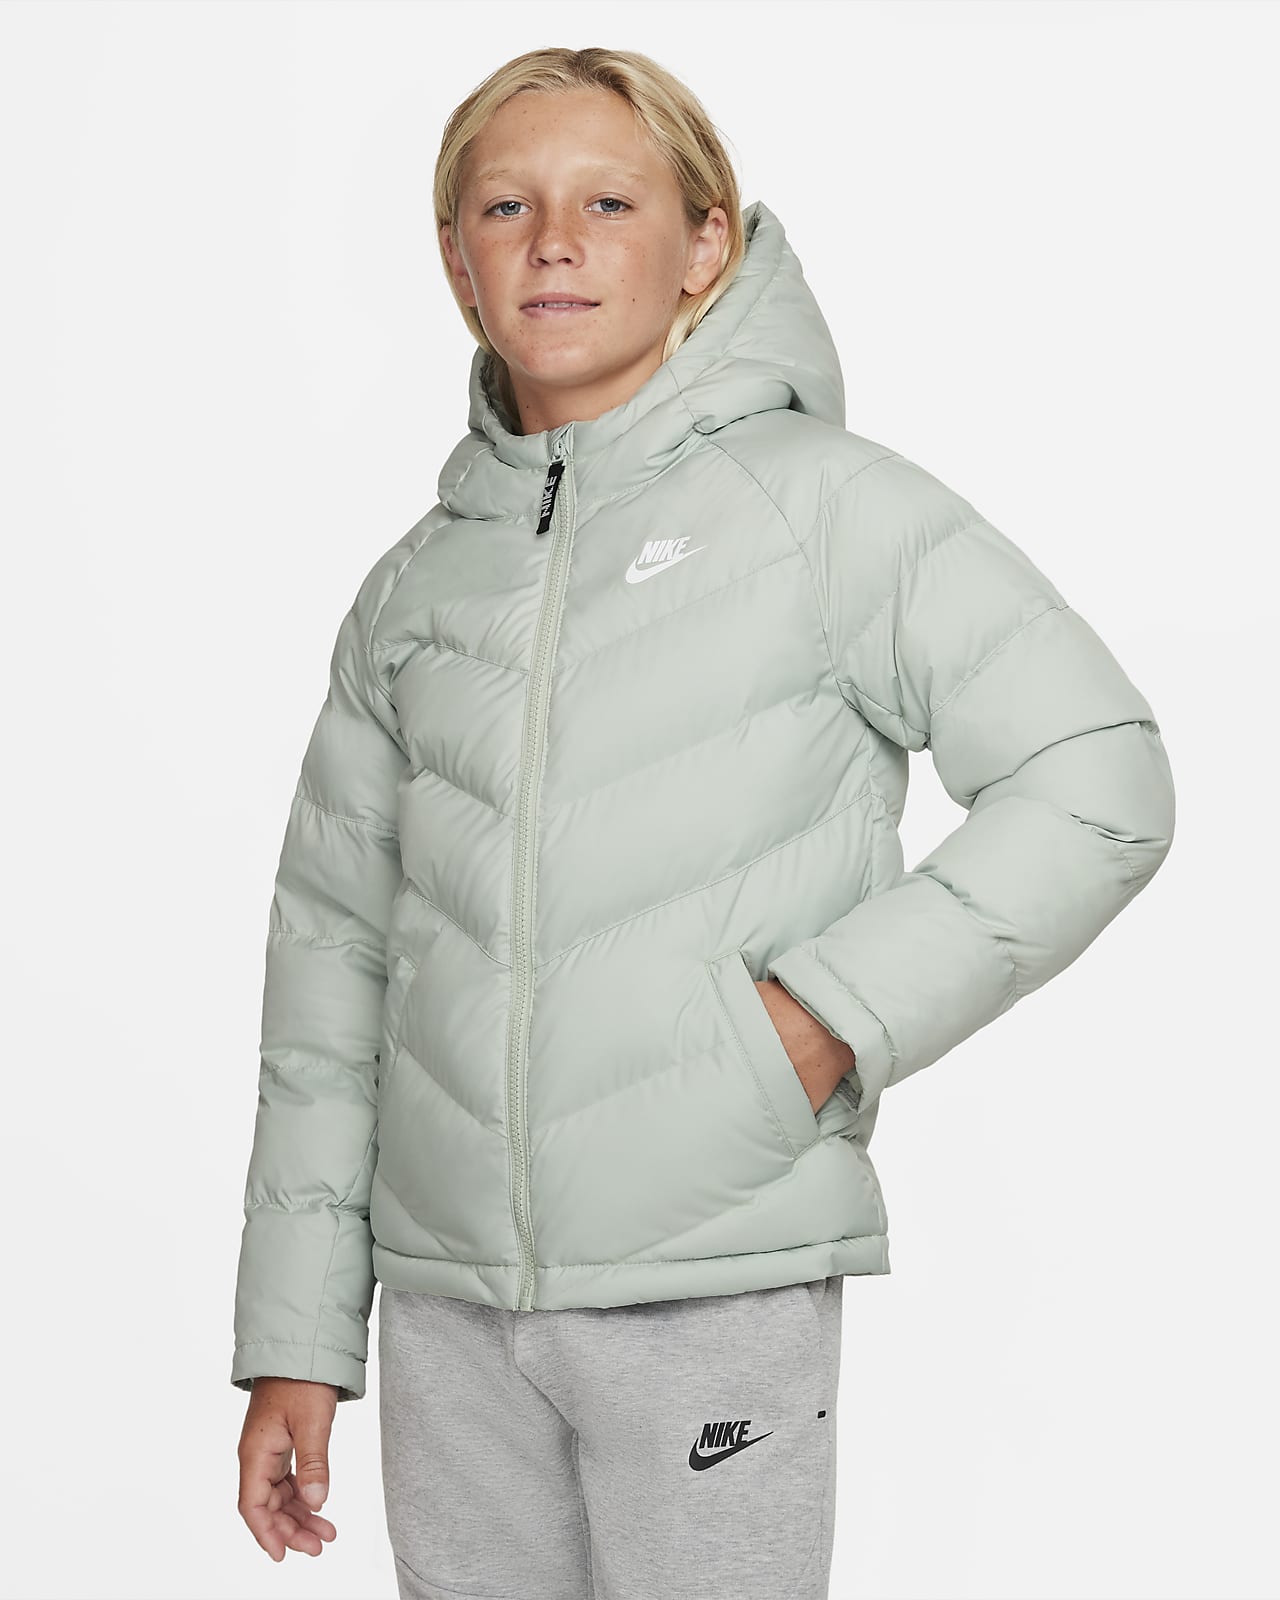 Nike Sportswear Jacke mit Synthetikfüllung für ältere Kinder